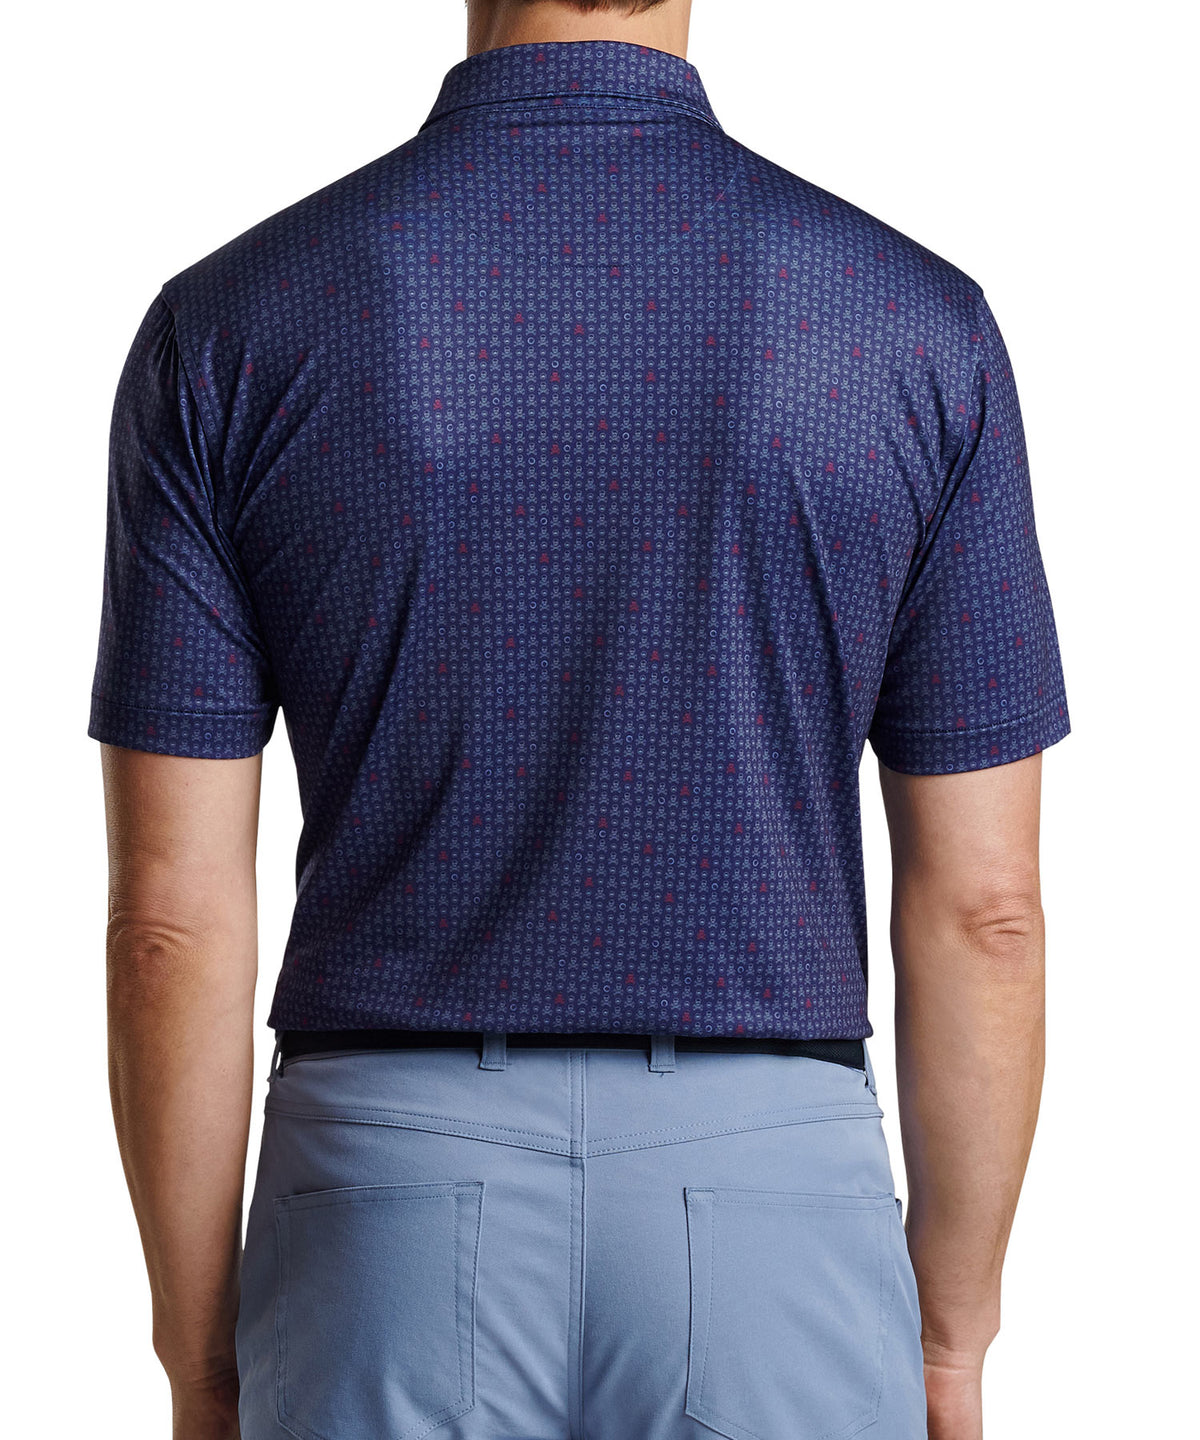 Peter Millar Short Sleeve Skull Print Polo Knit Shirt, Big & Tall